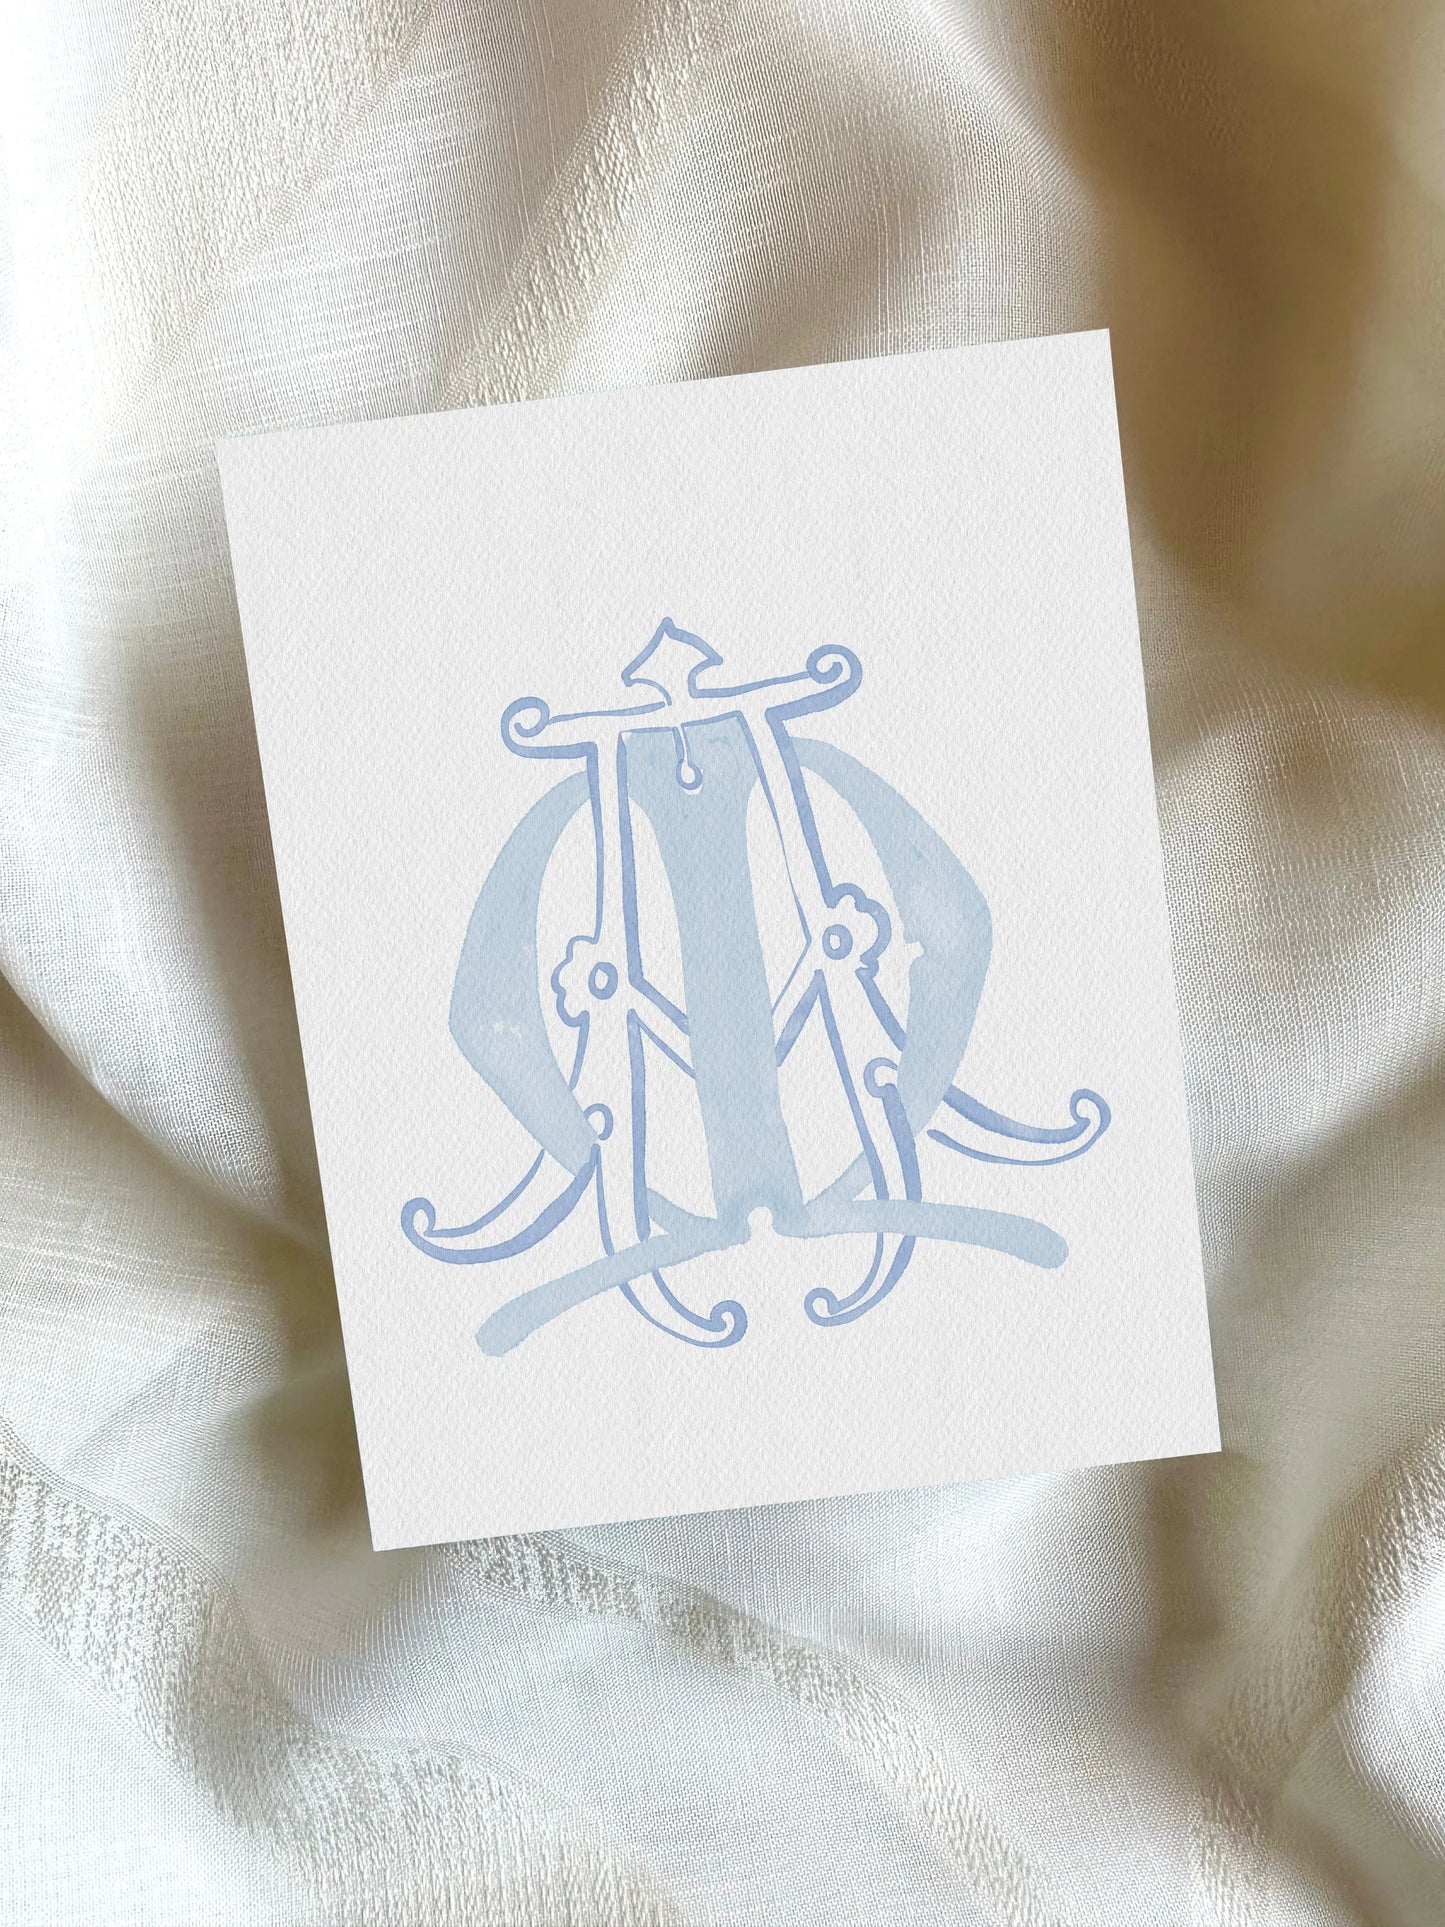 2 Letter Monogram with Letters MA | Digital Download - Wedding Monogram SVG, Personal Logo, Wedding Logo for Wedding Invitations The Wedding Crest Lab